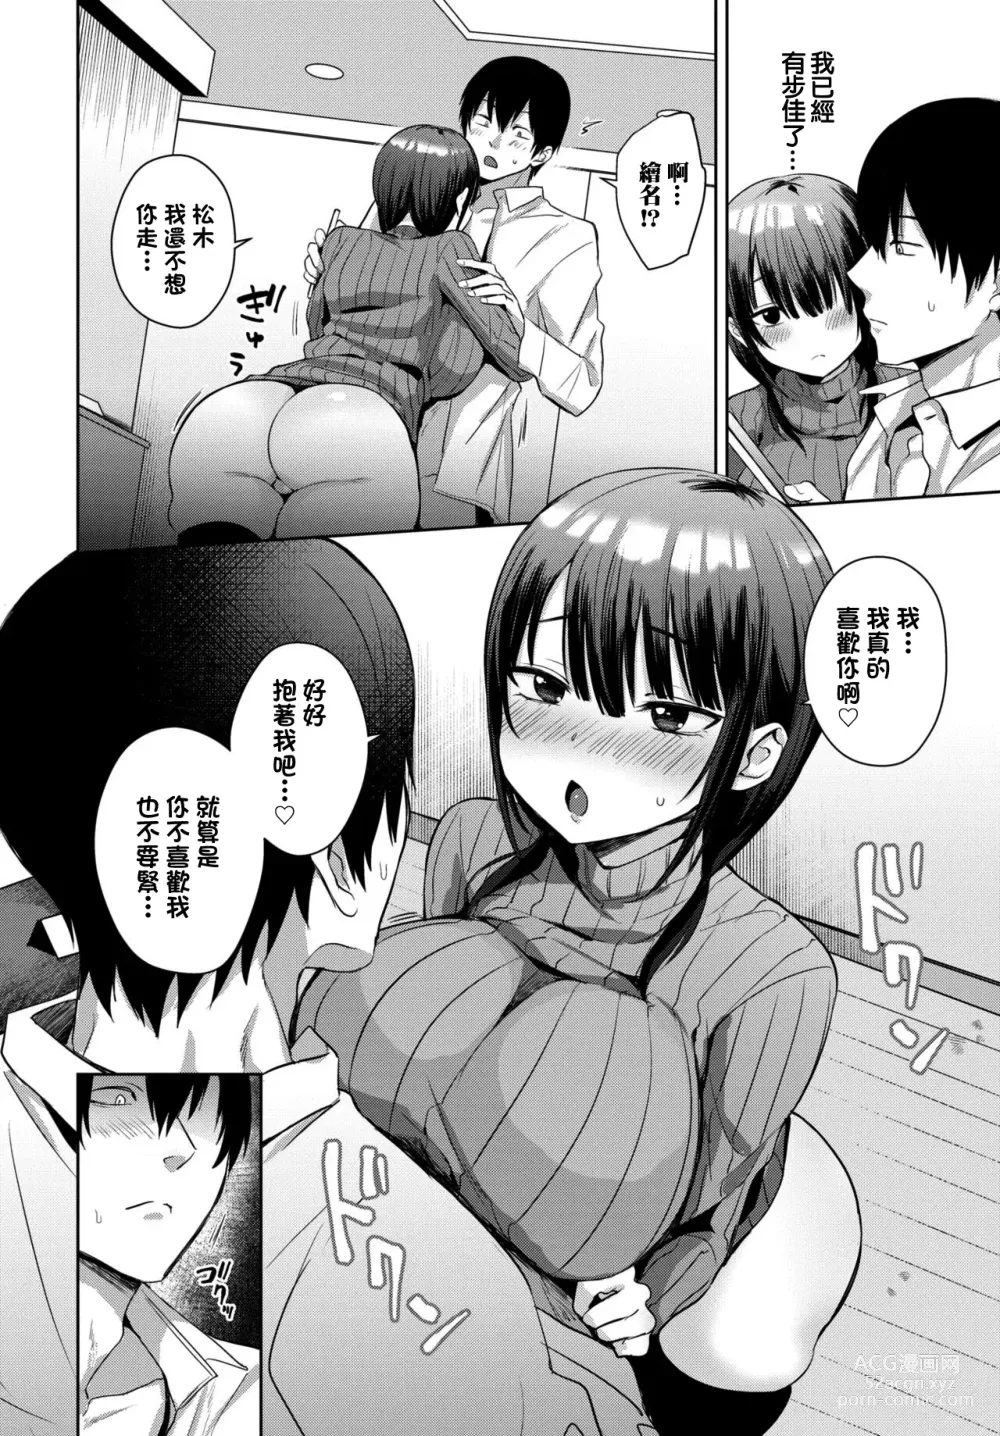 Page 10 of manga Furaretori